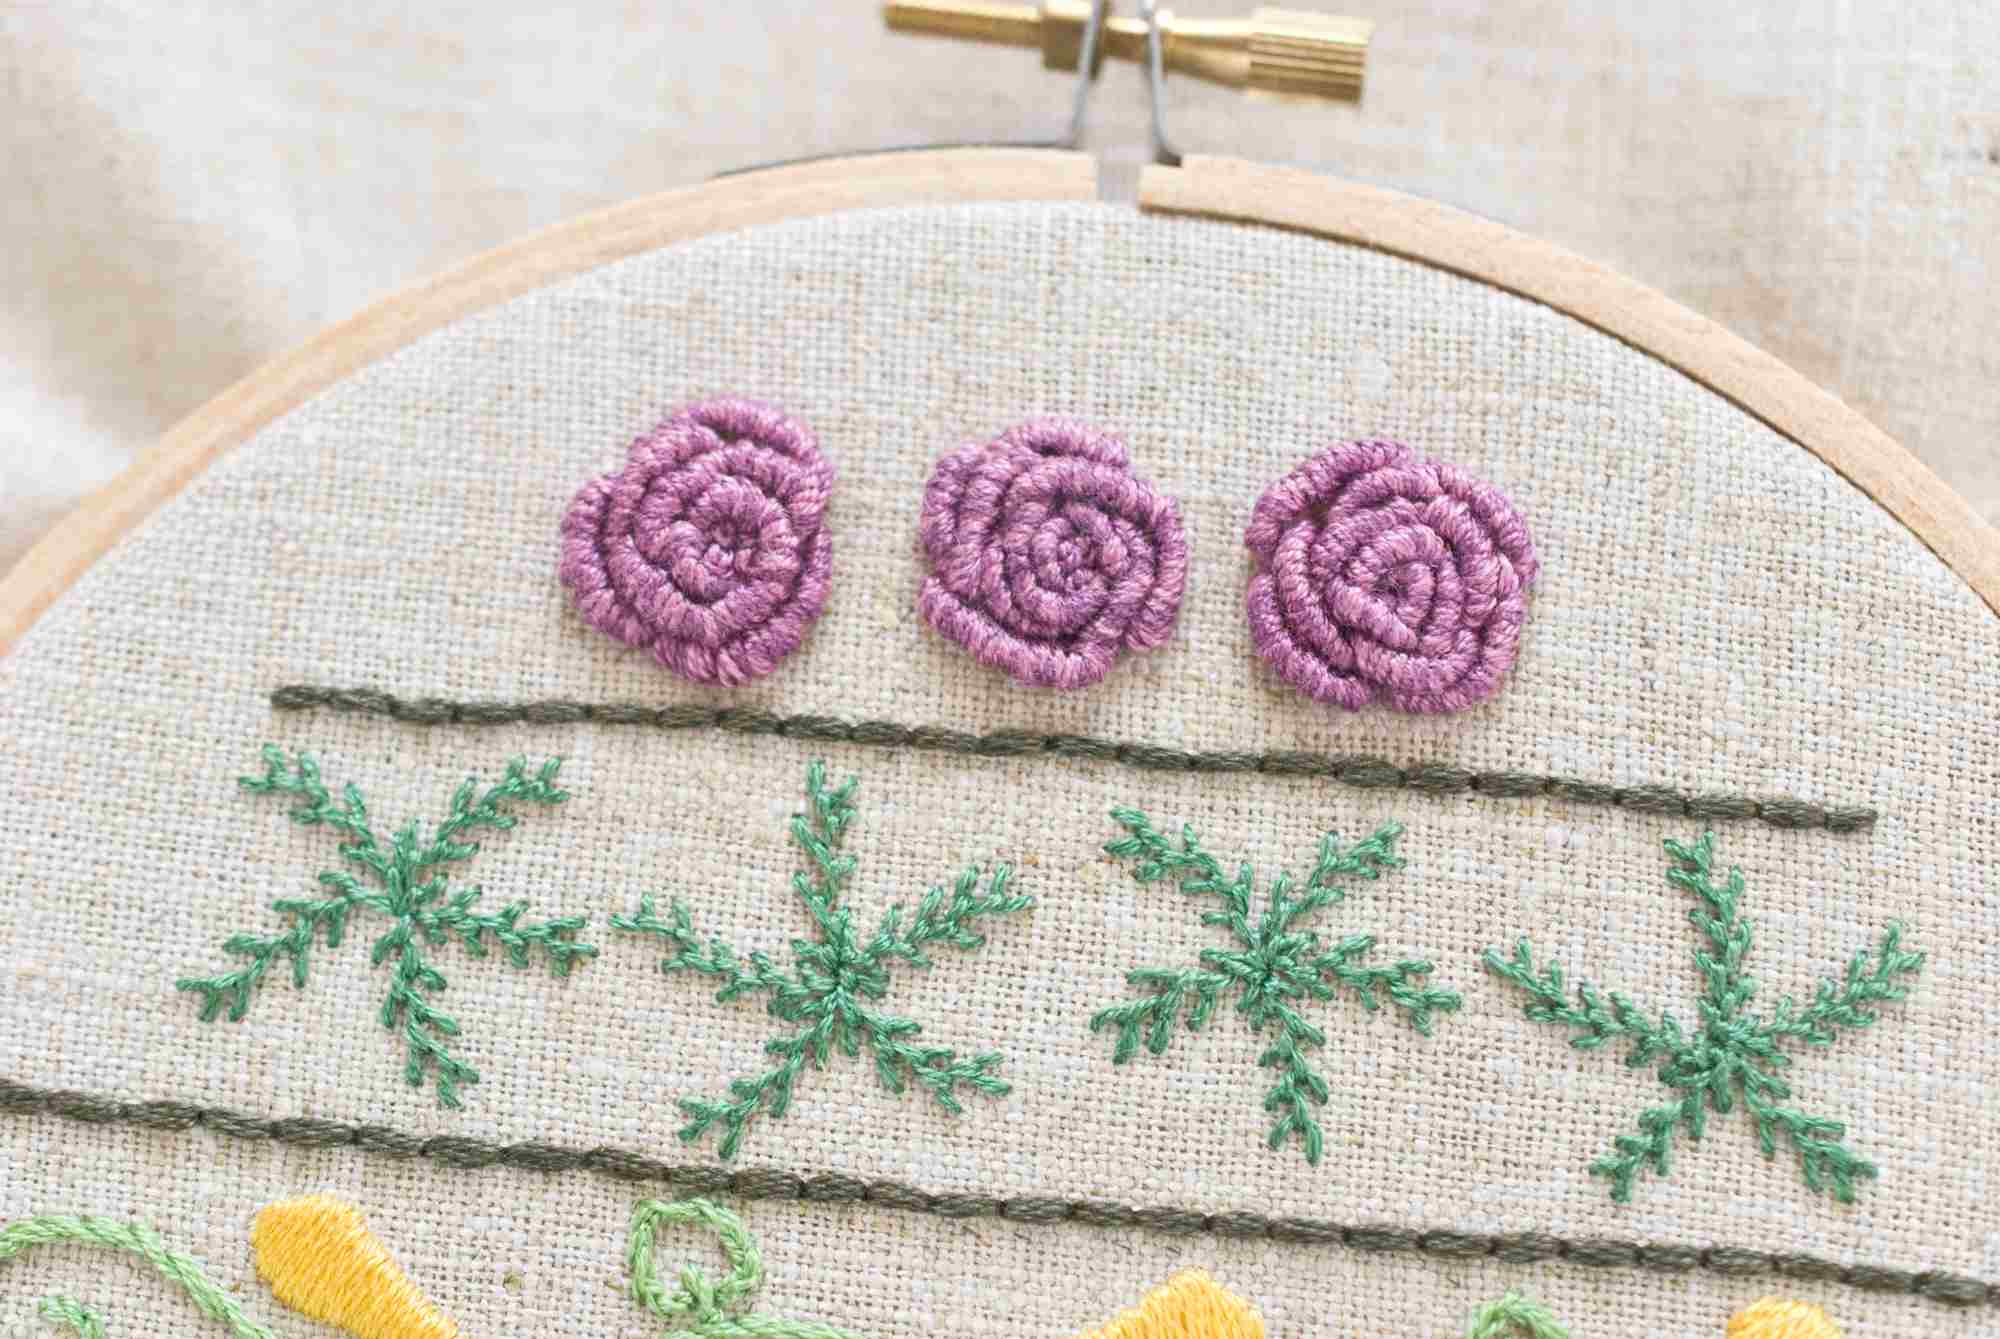 Embroidery Sampler Patterns Vegetable Garden Embroidery Sampler Pattern